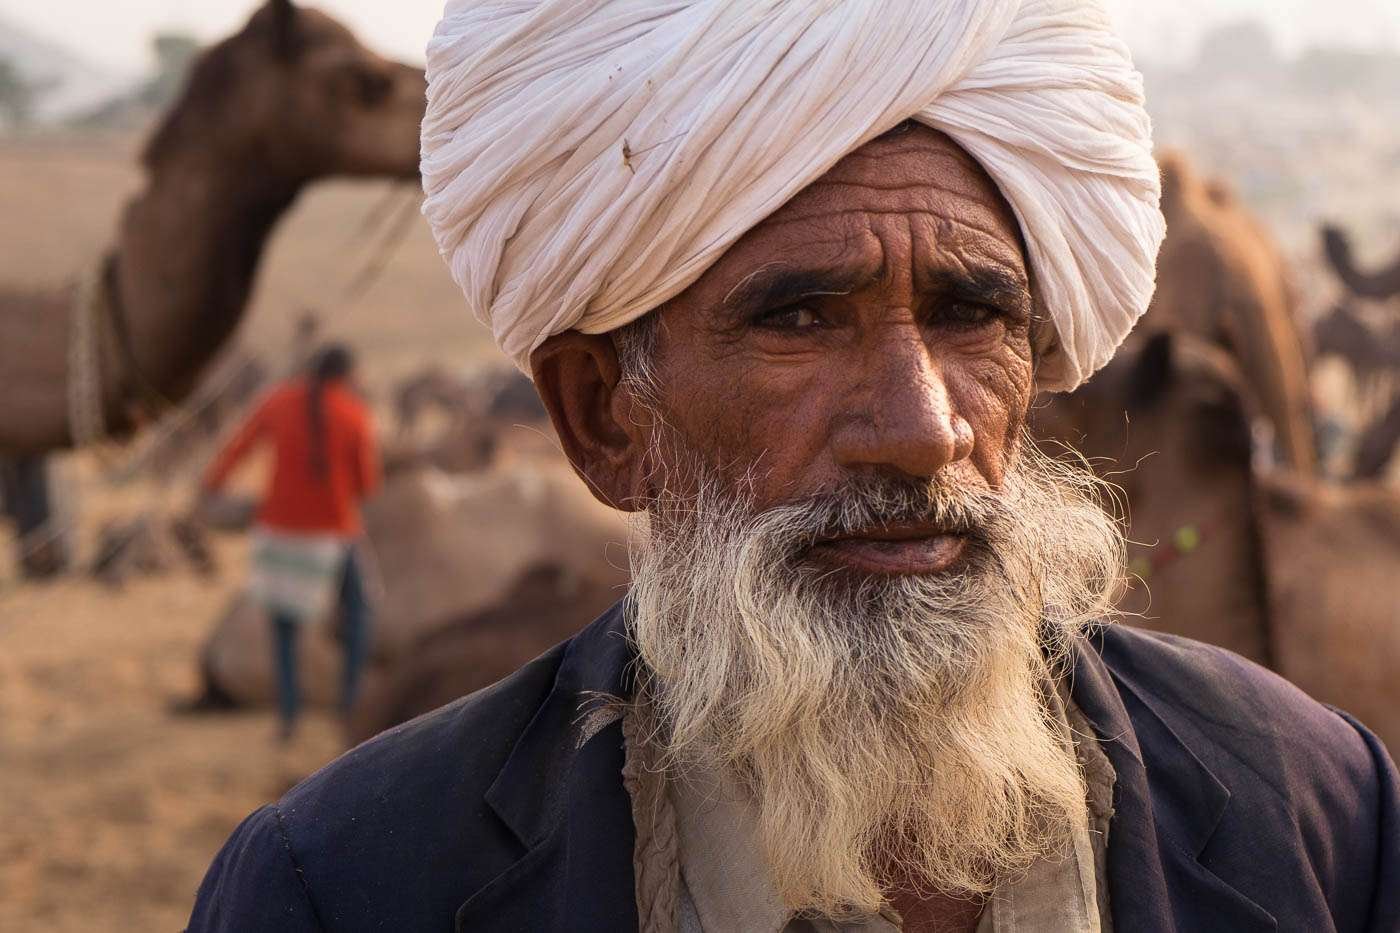 Pushkar Camel Fair photography tour - People and culture photo